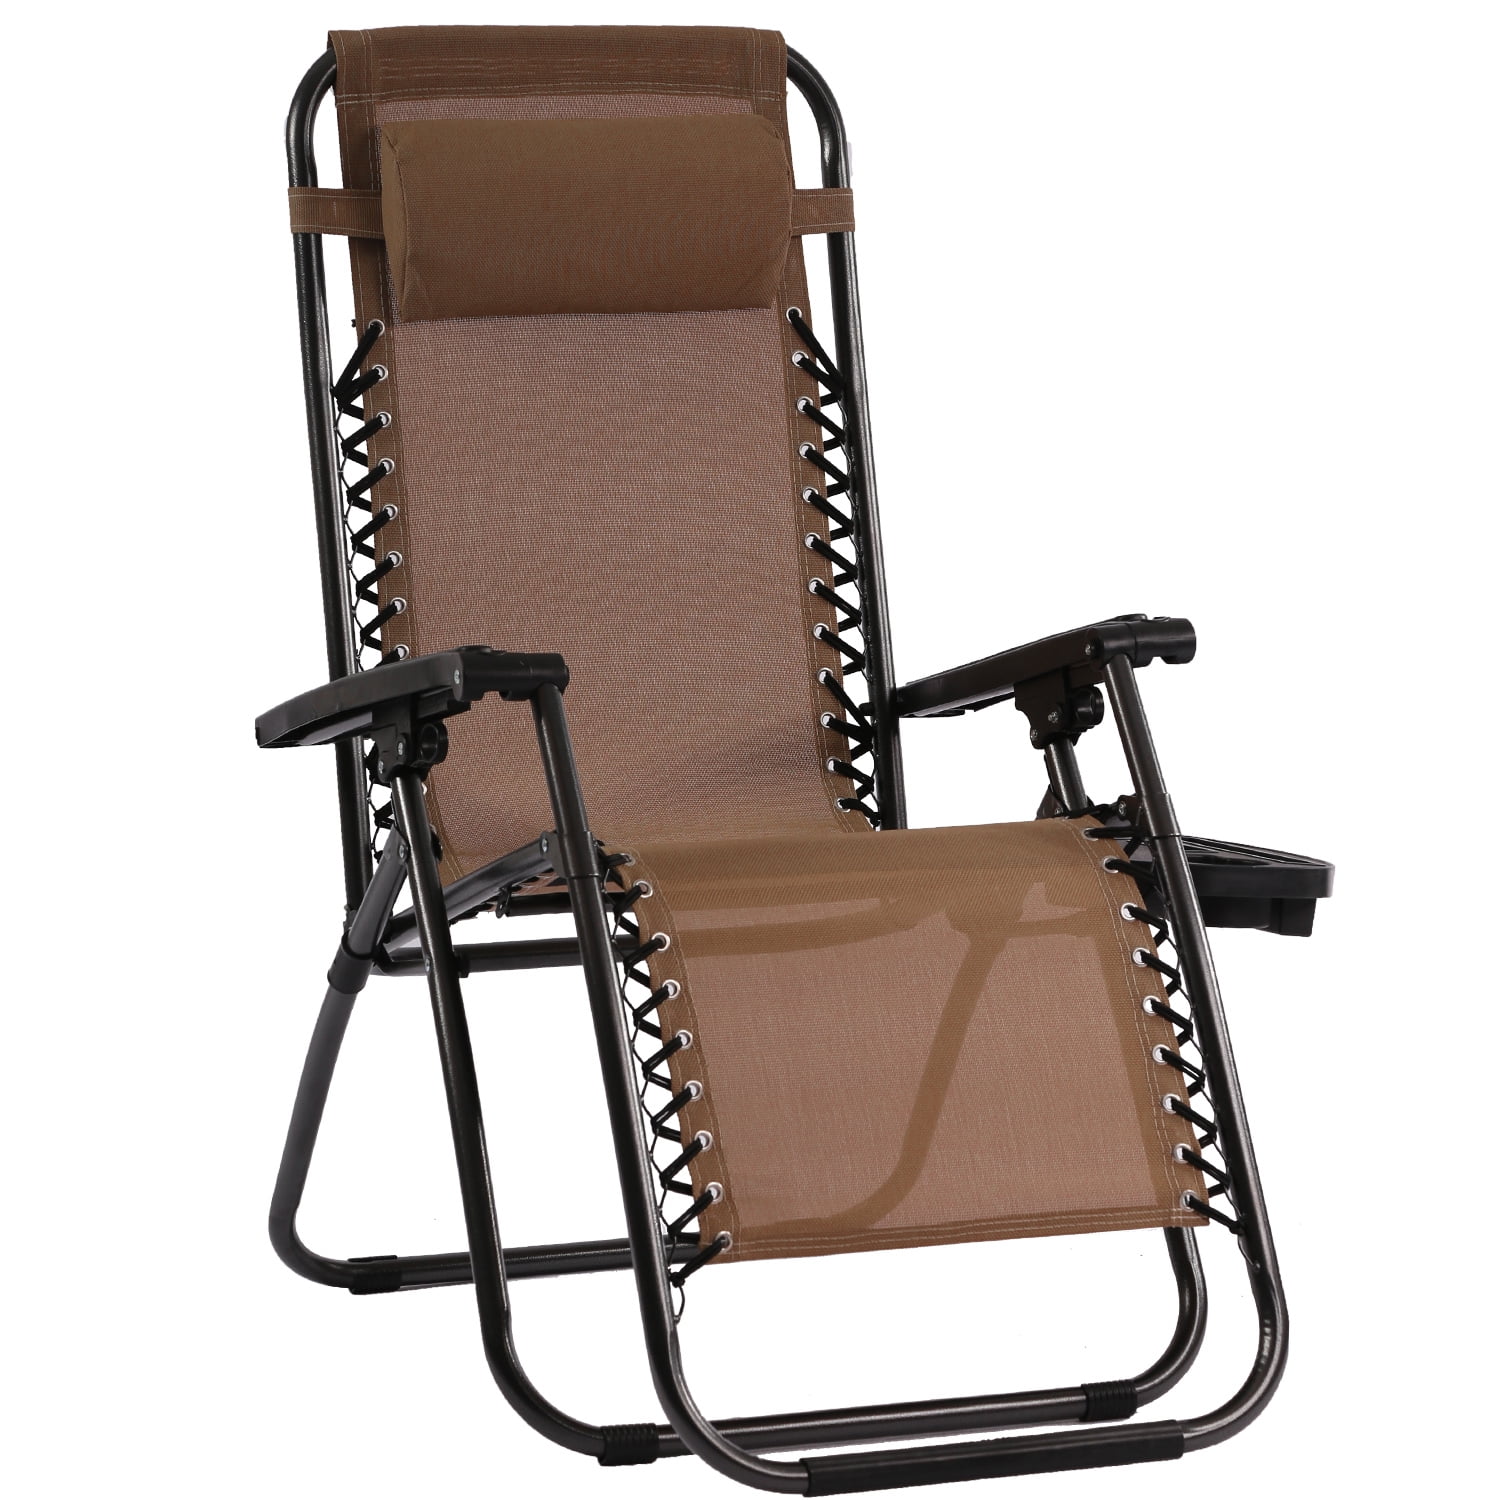 2x Zero Gravity Chairs Patio Beach Camping Folding Recliner w/Tray Phone Holder 